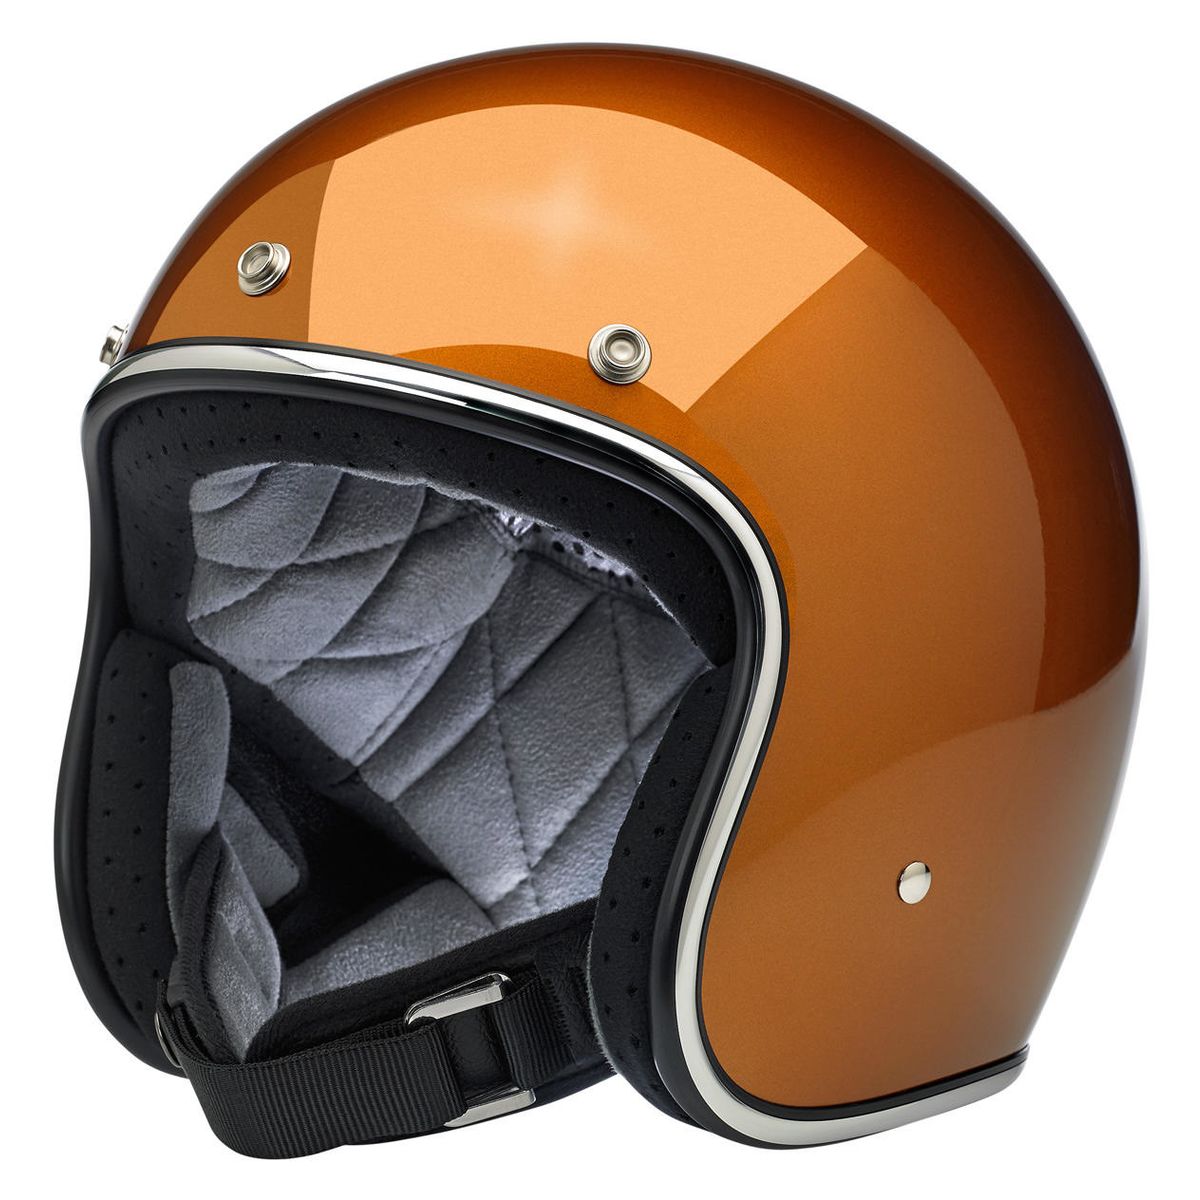 Biltwell Bonanza Helmet in Copper